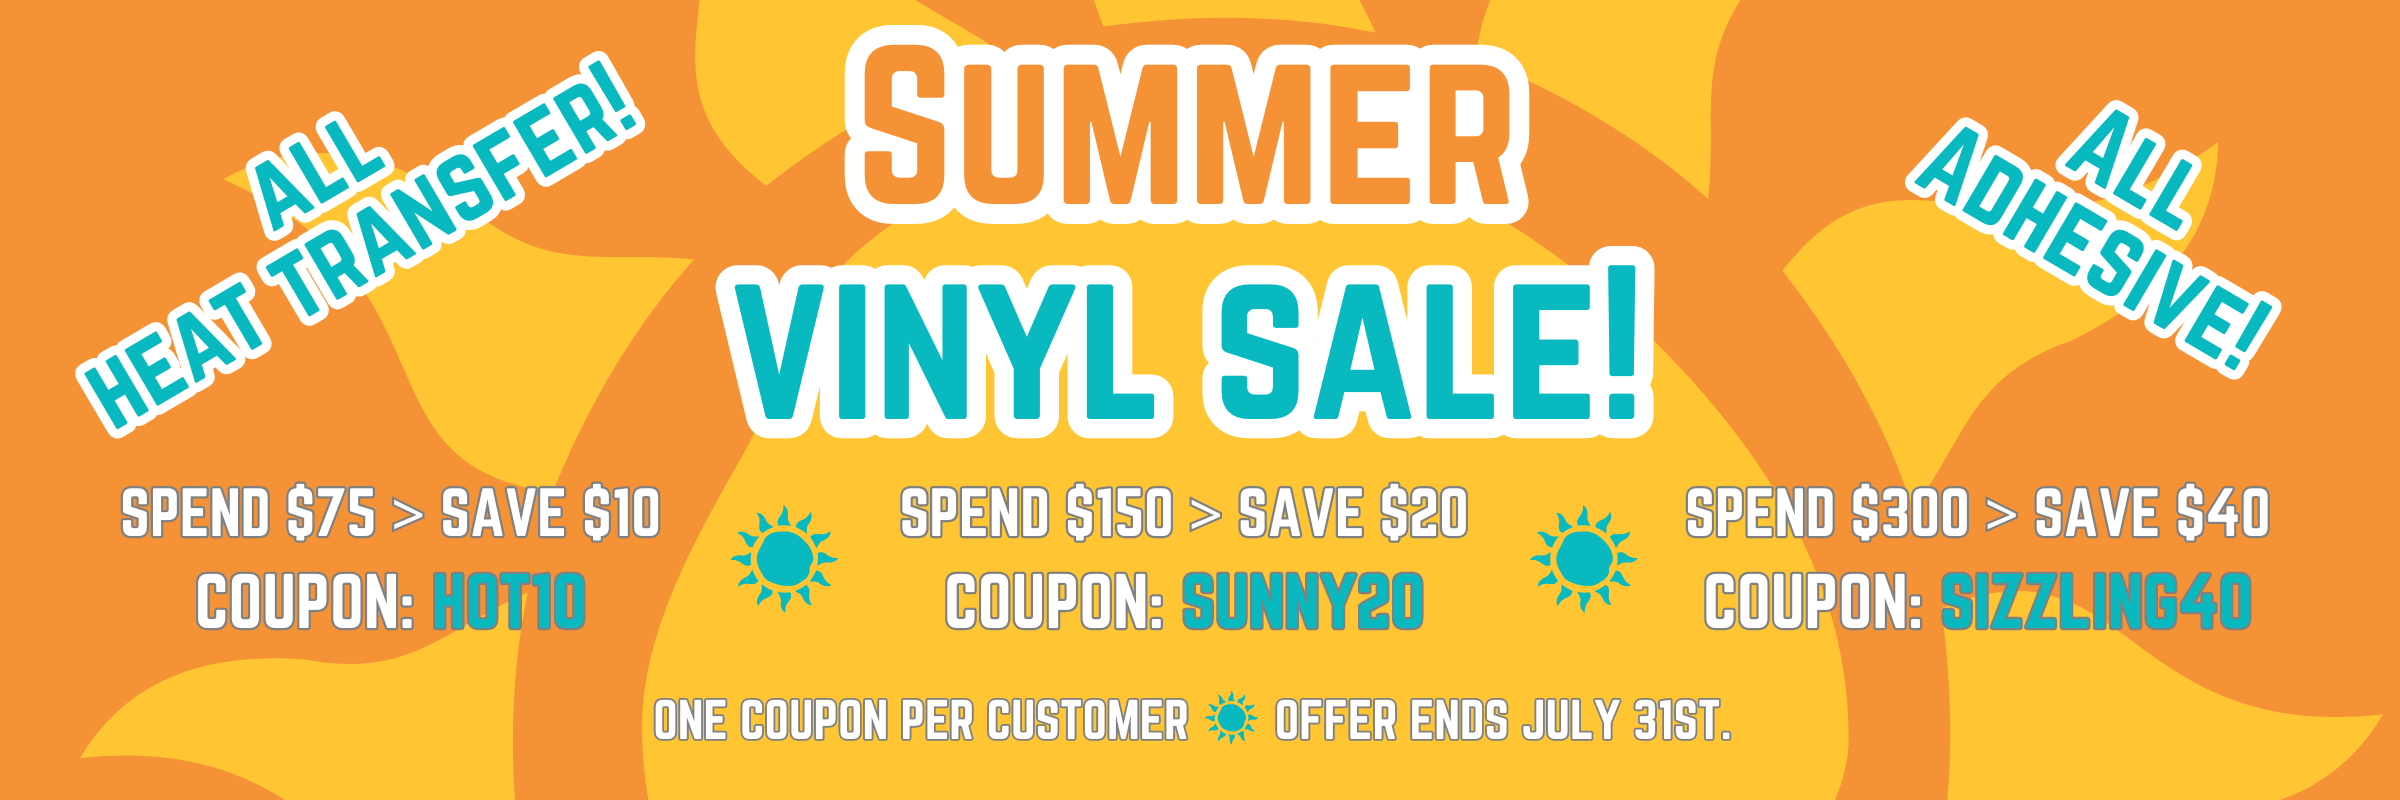 Summer Vinyl Sale!